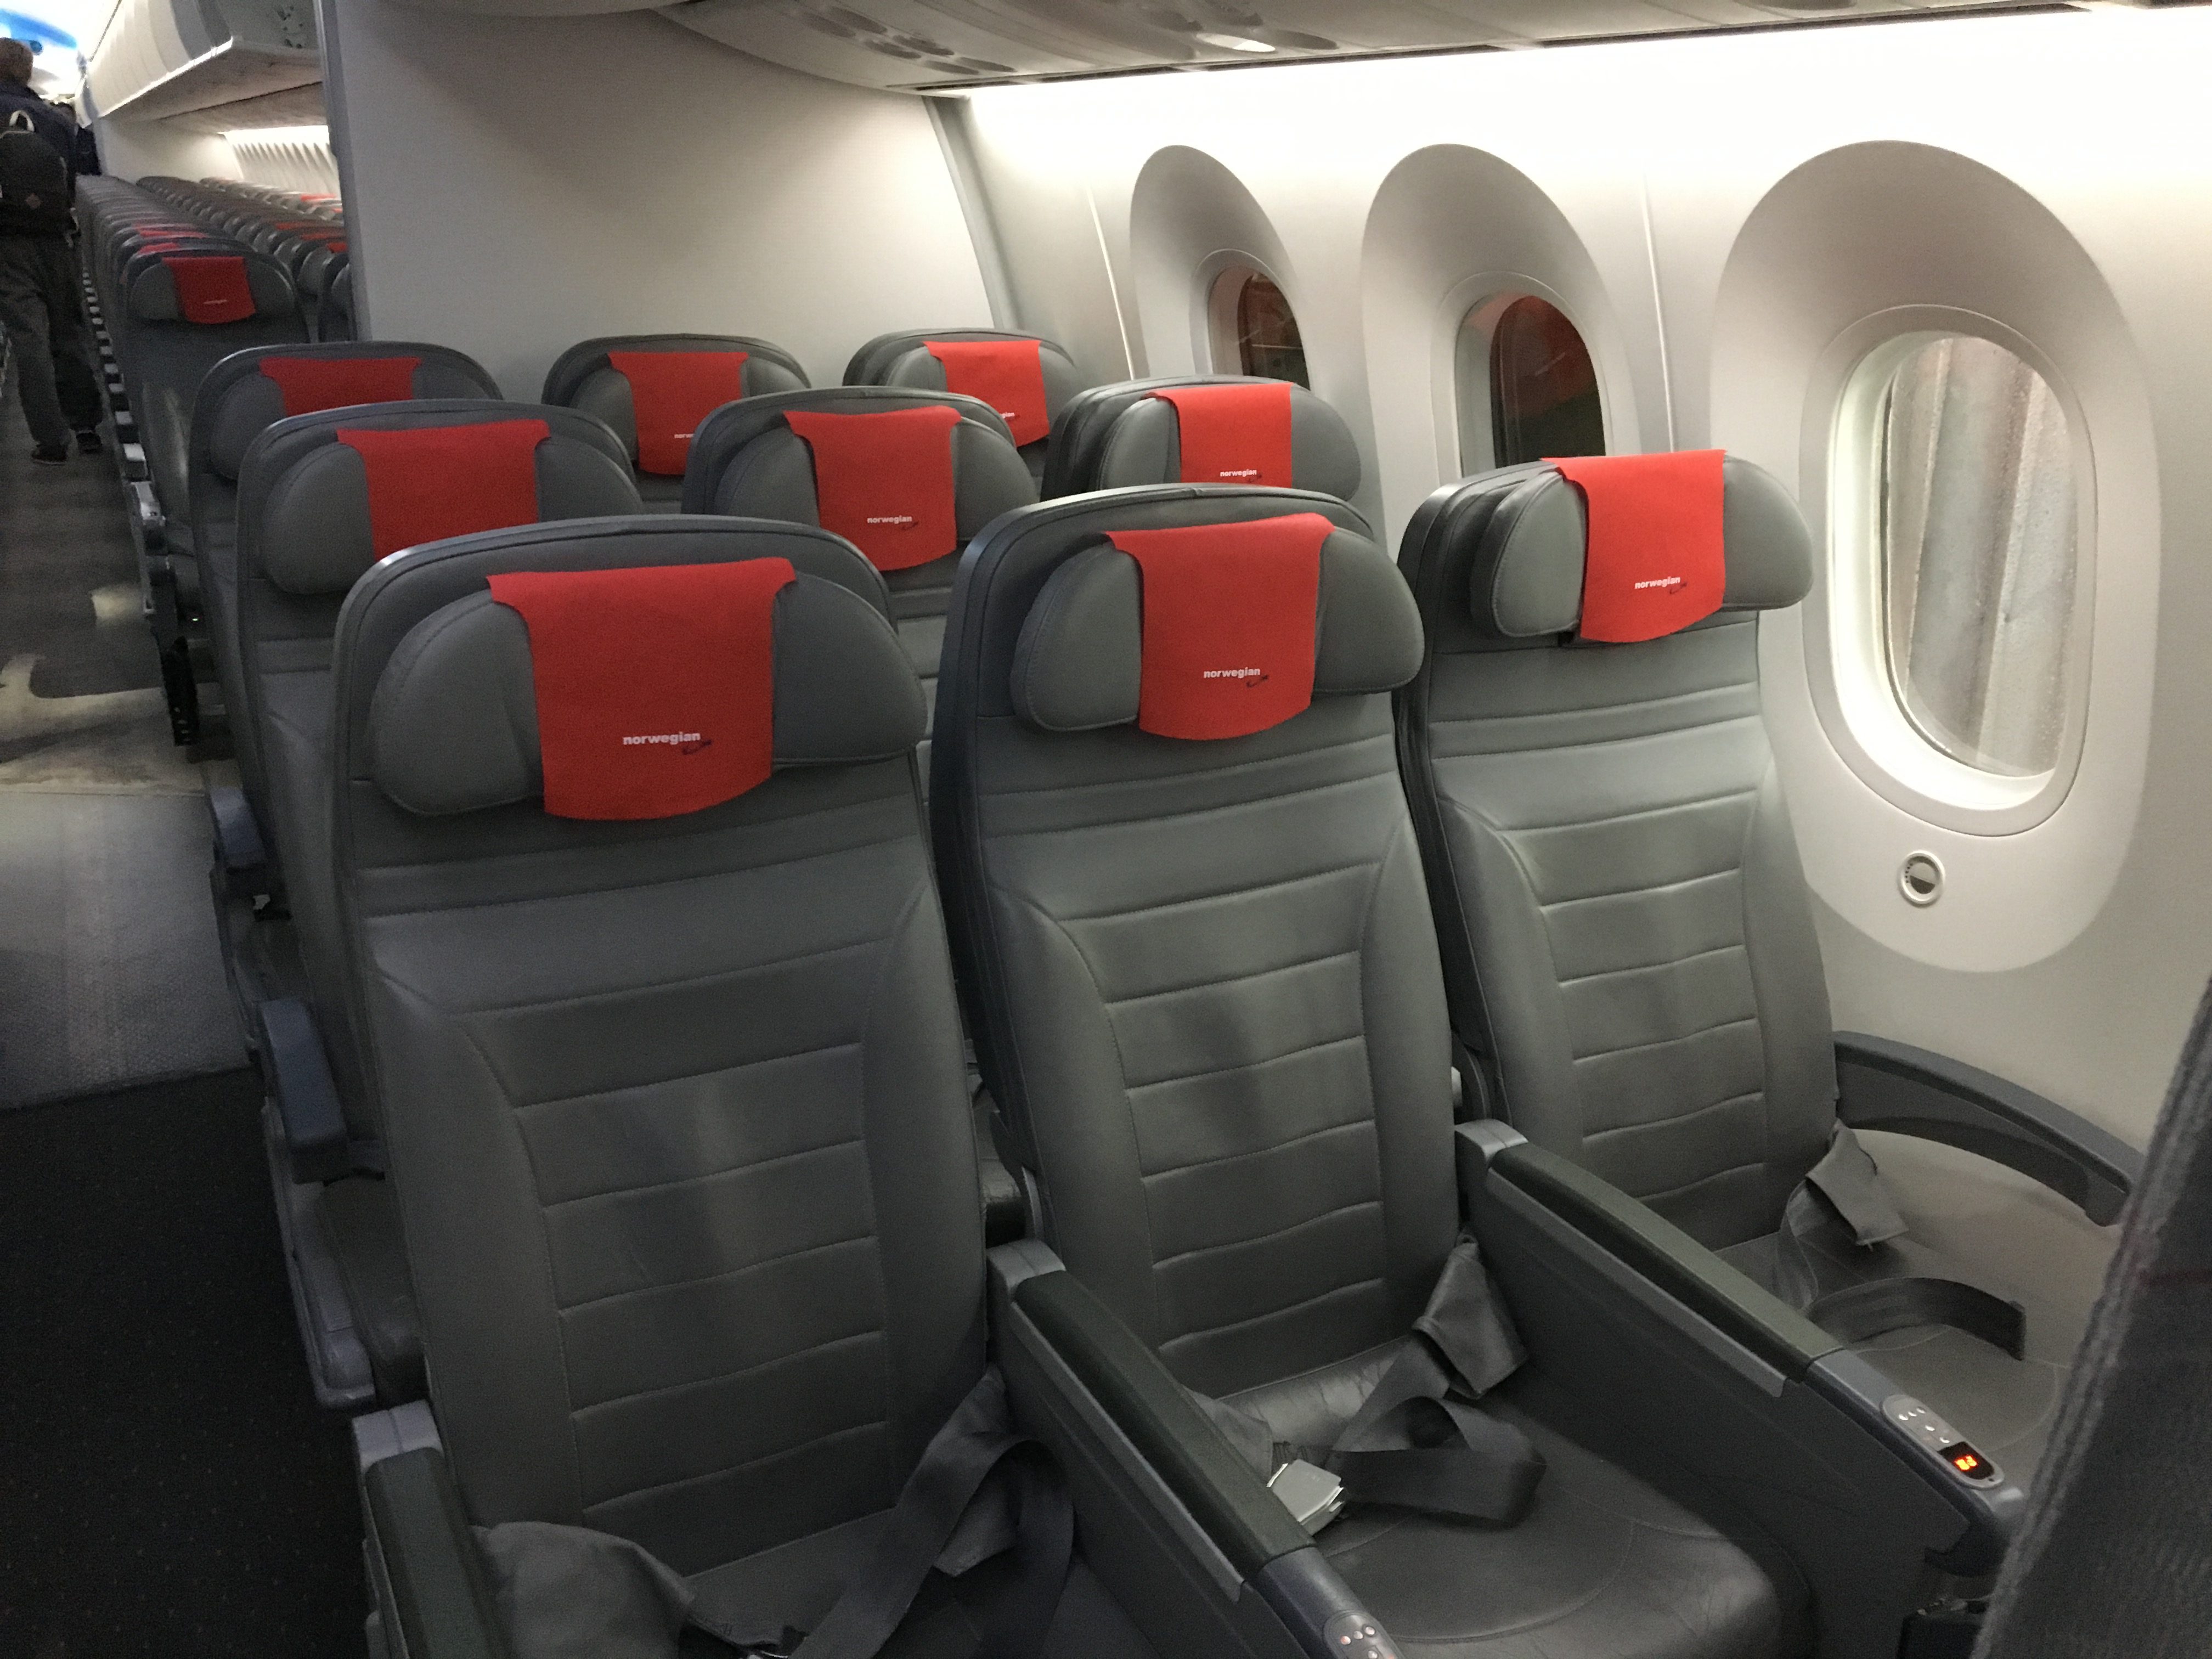 Flying Norwegian S Long Haul Premium Product On The 787